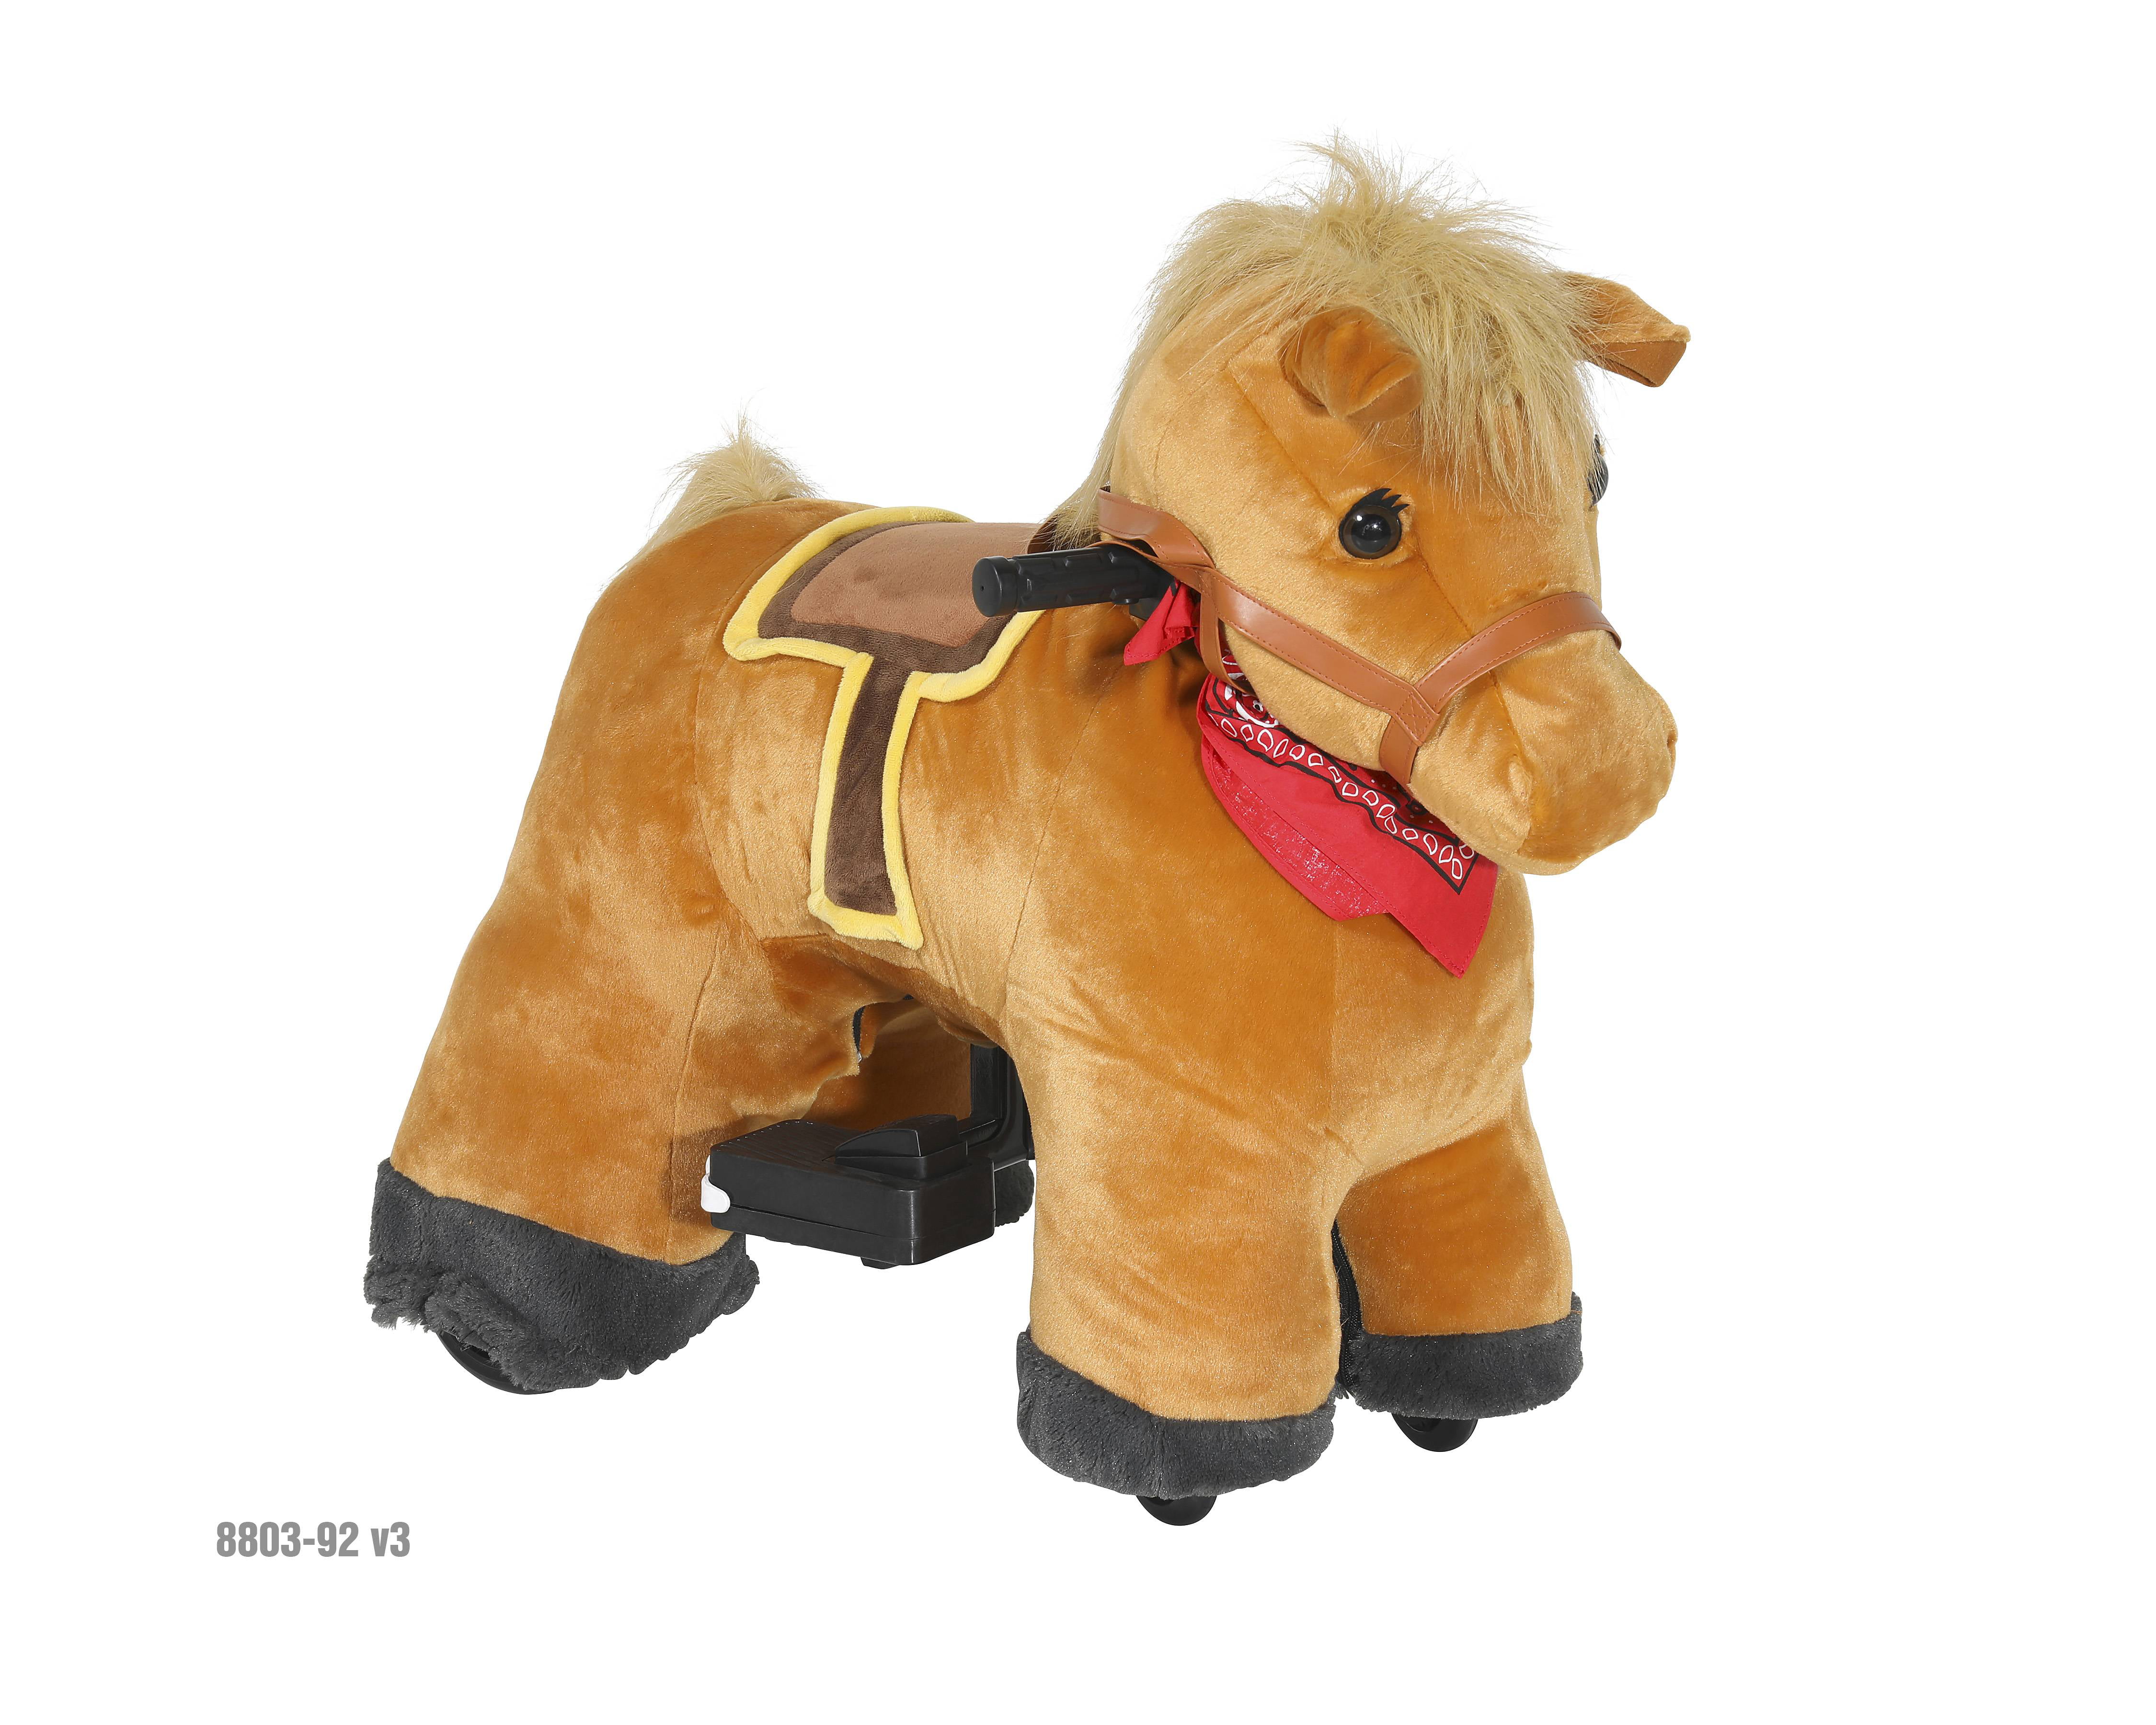 sit on pony toy